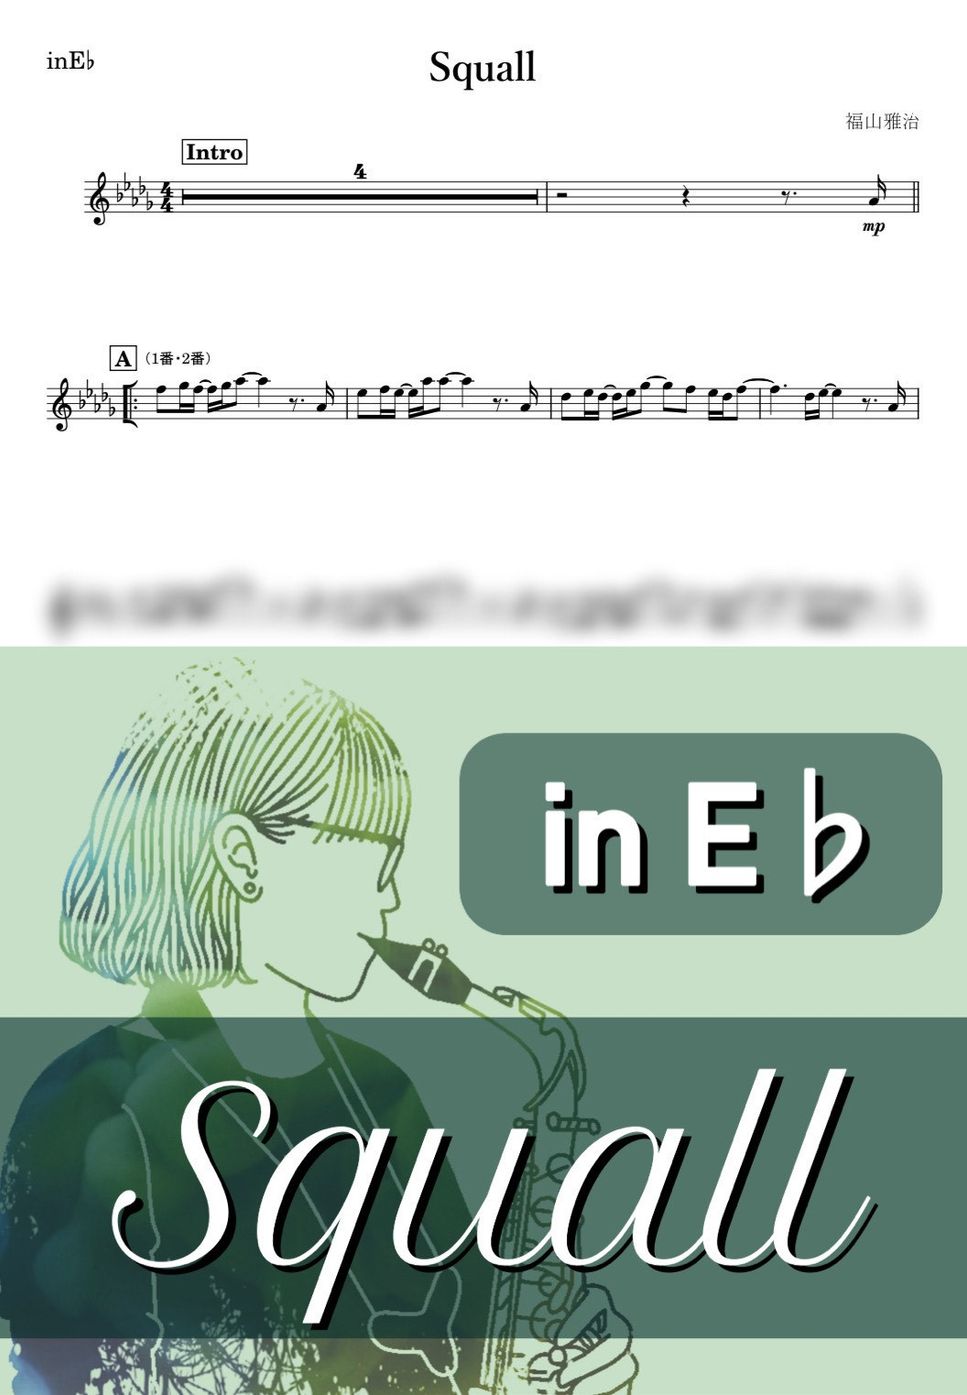 福山雅治 - Squall (E♭) by kanamusic